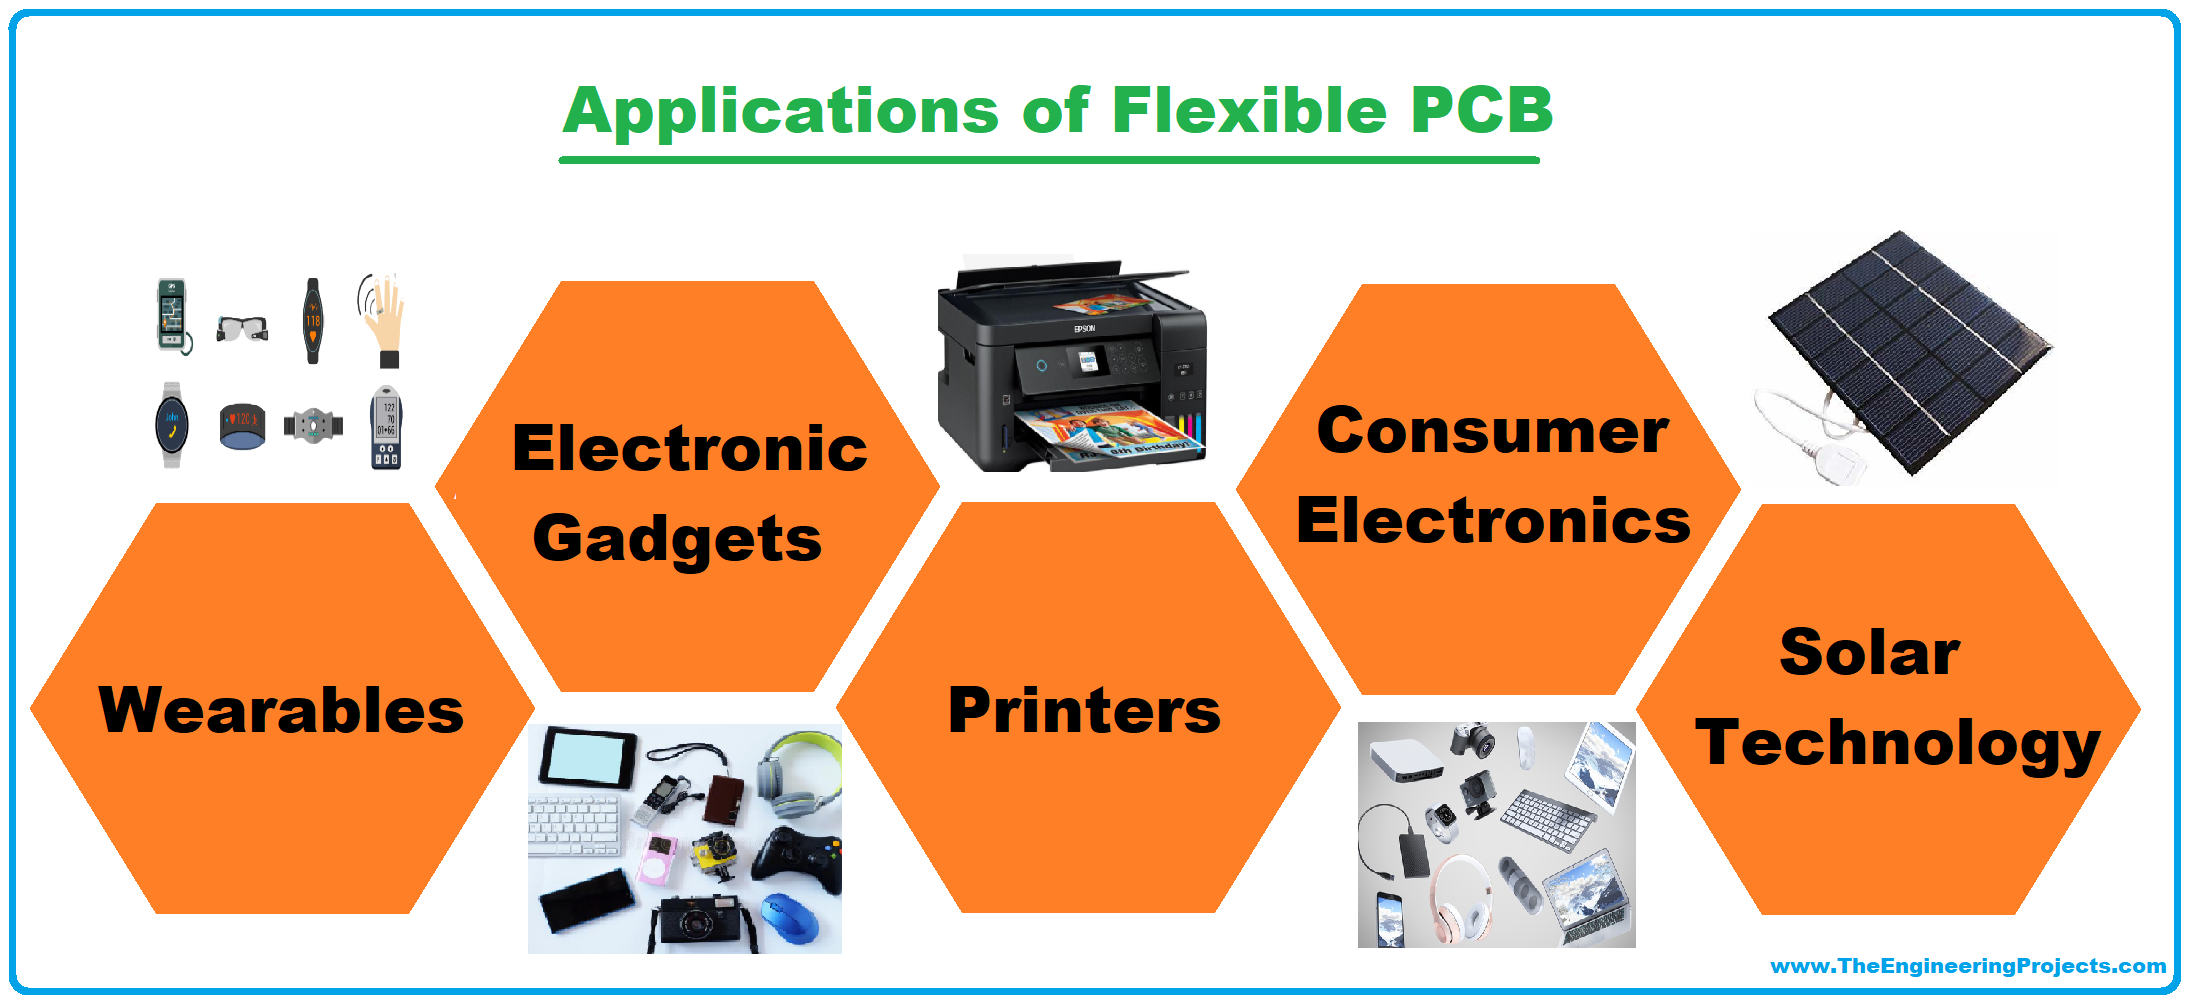 flexible pcb, flex pcb, introduction to flexible pcb, intro to flexible pcb, what is flexible pcb, what is flex pcb, applications of flexible pcb, fabrication of flexible pcb, Flexible PCB Manufacturing Process